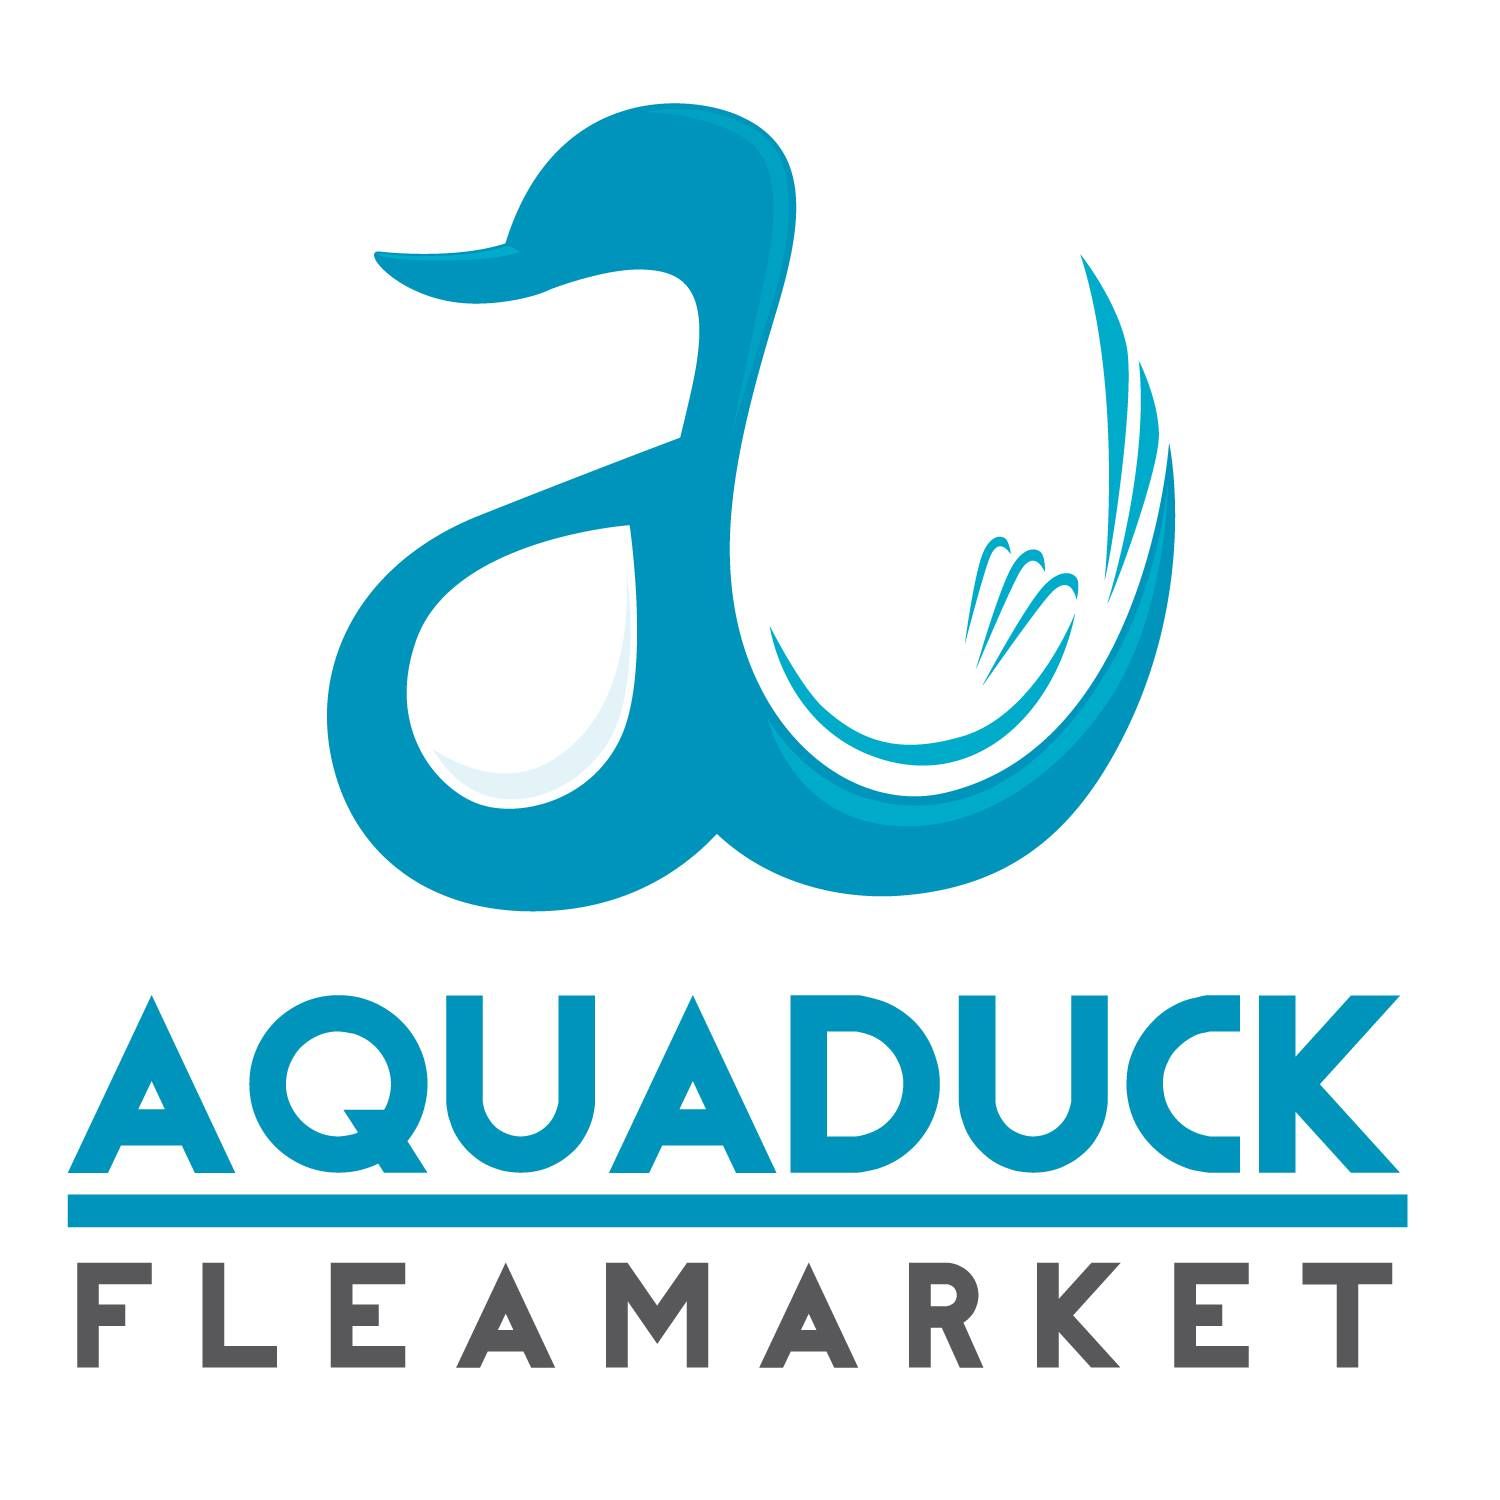 AquaDuck FleaMarket - New York, New York 11208